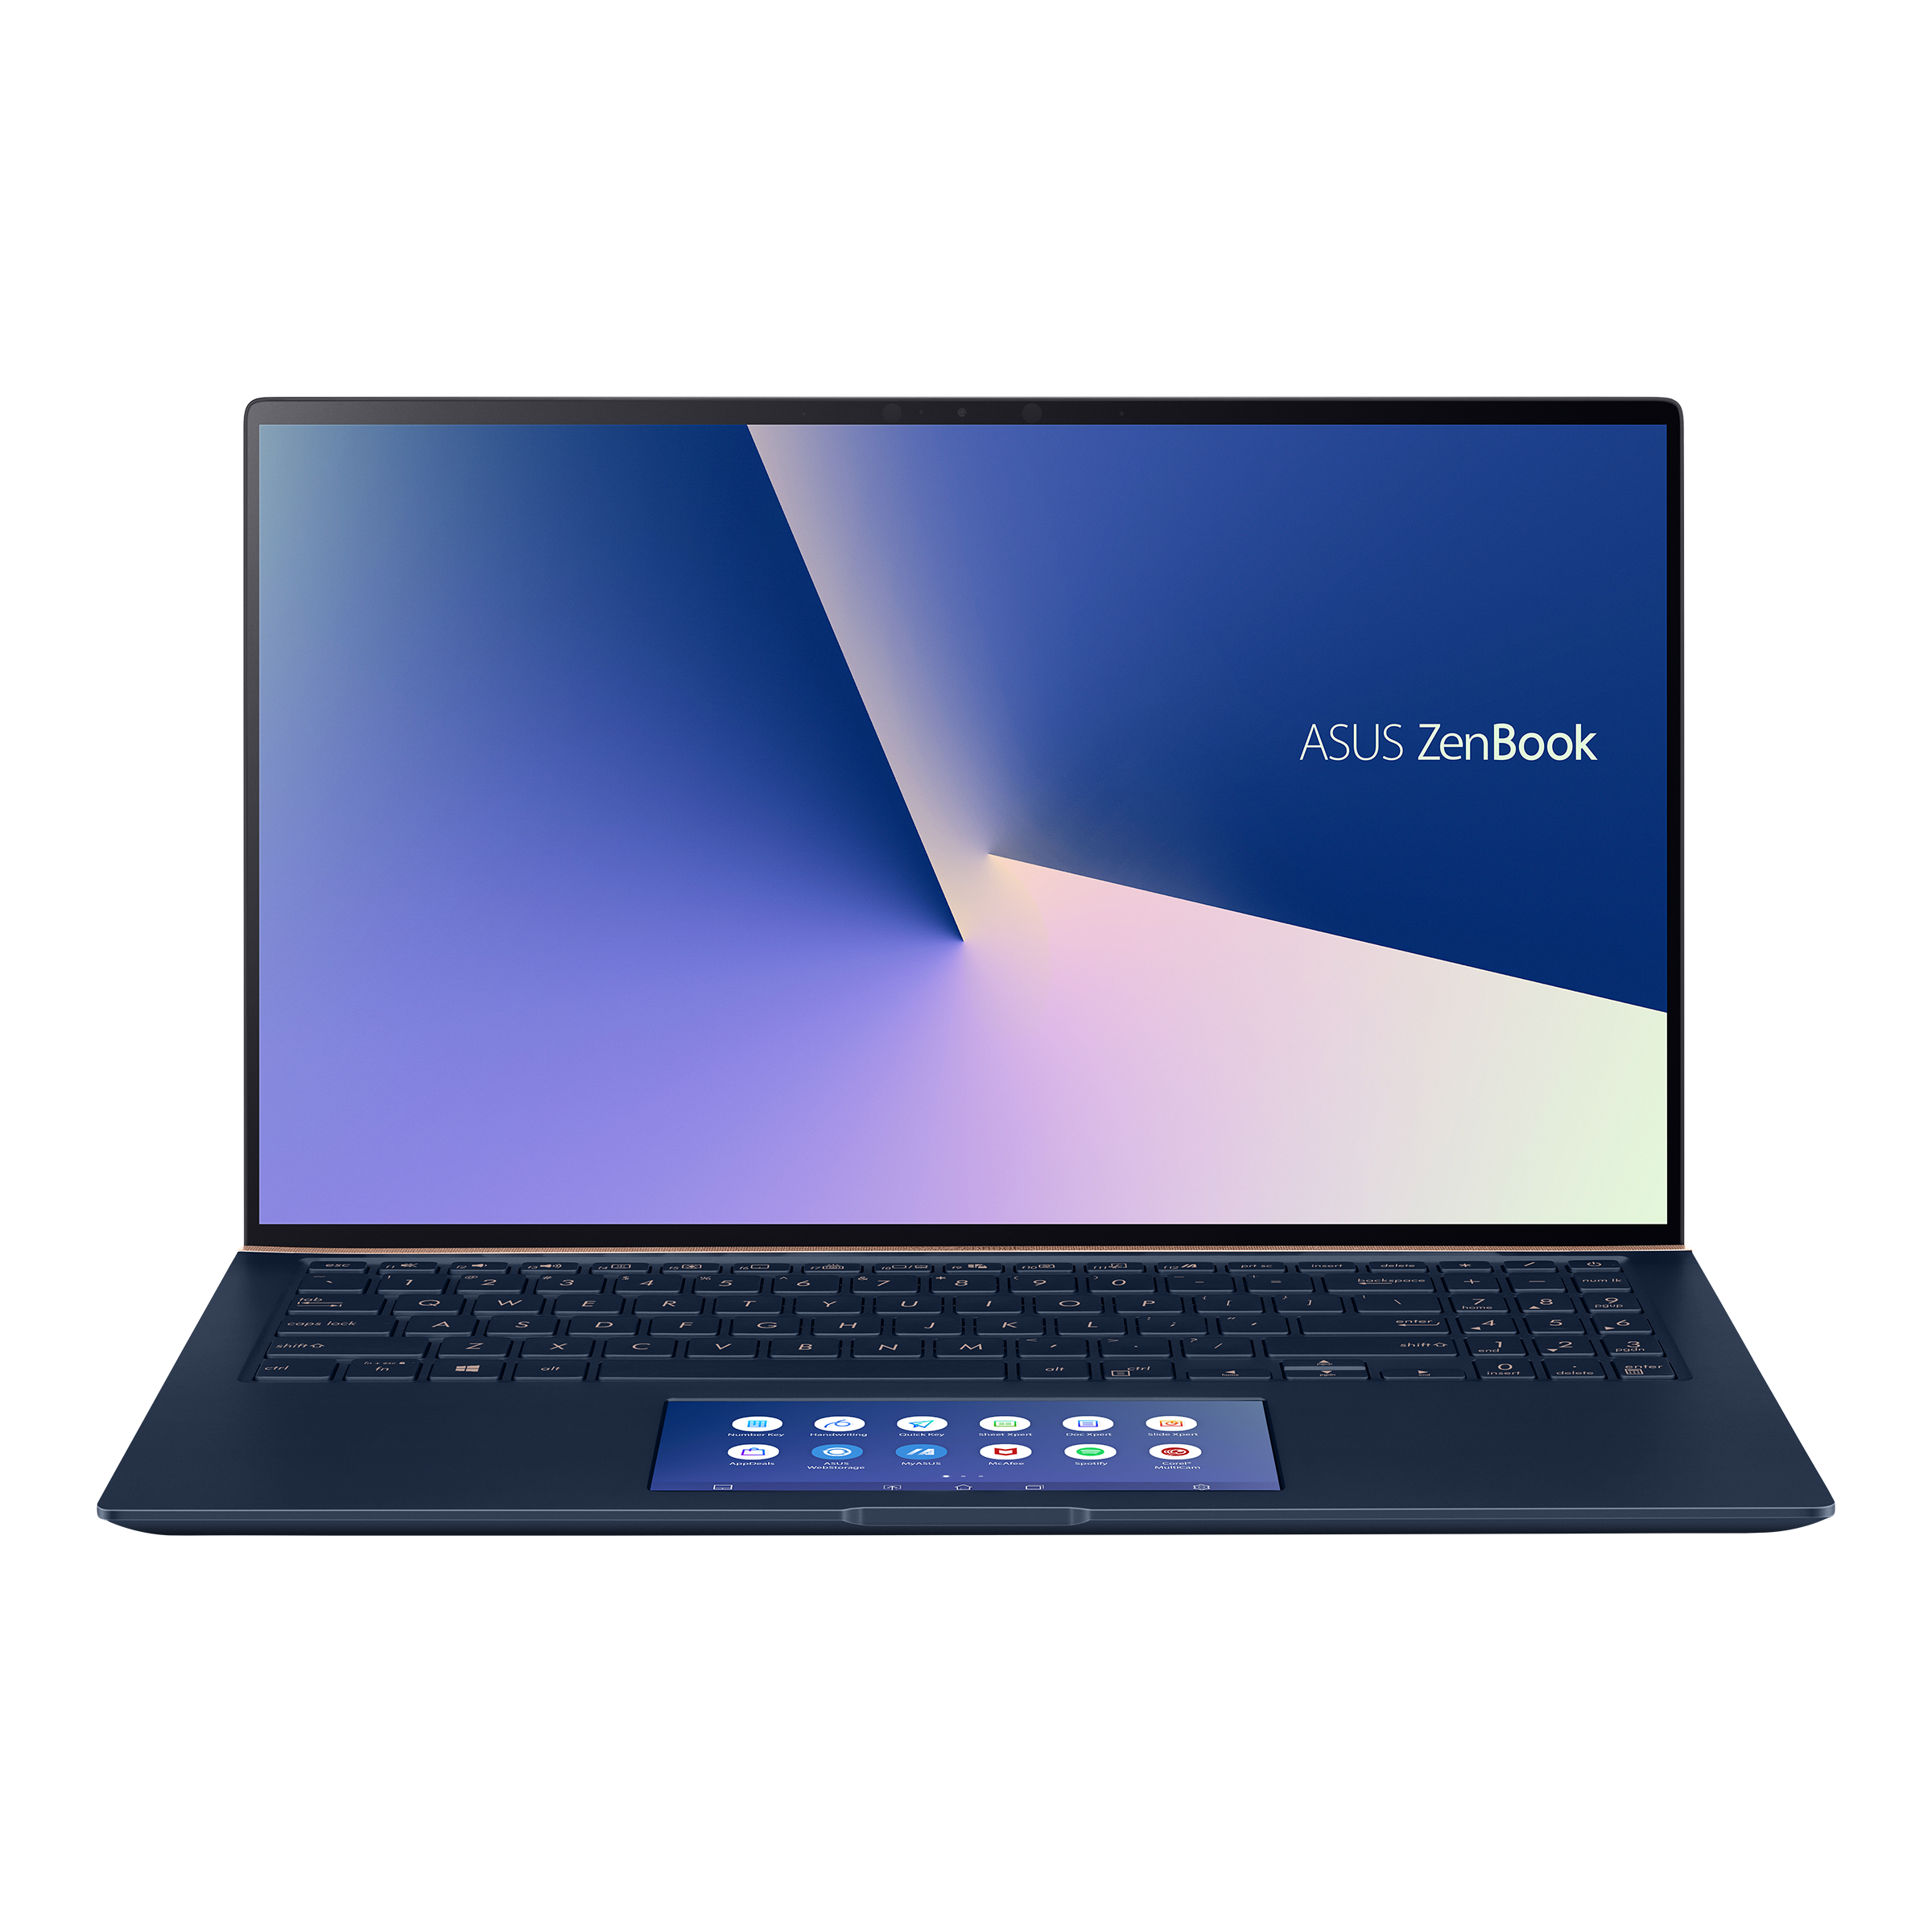 Asus ZenBook 15 review